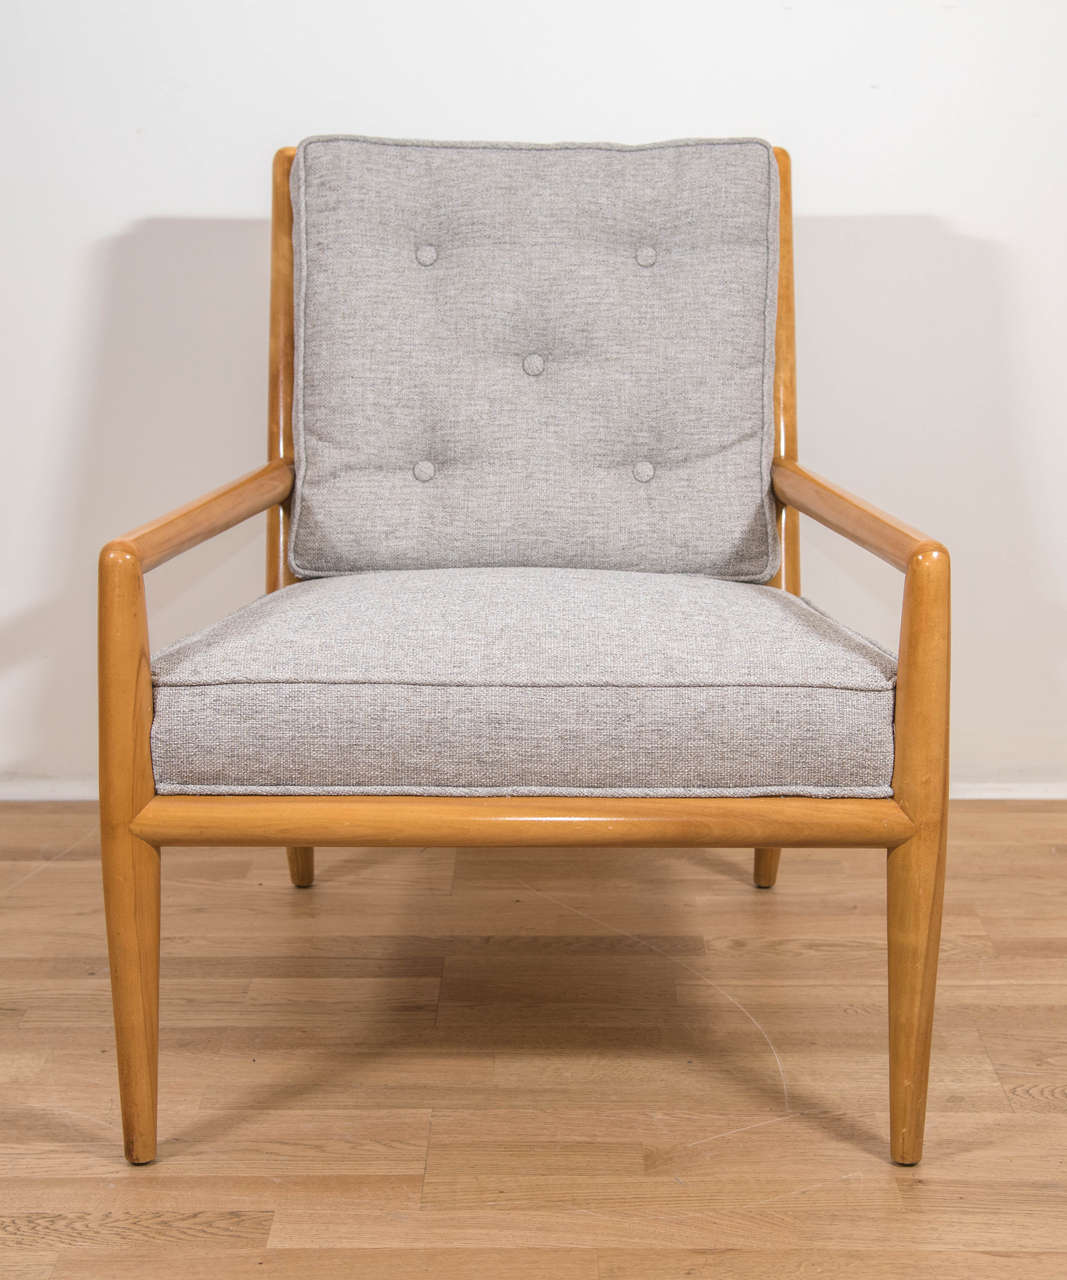 American Lounge Chair and Ottoman by T.H. Robsjohn-Gibbings